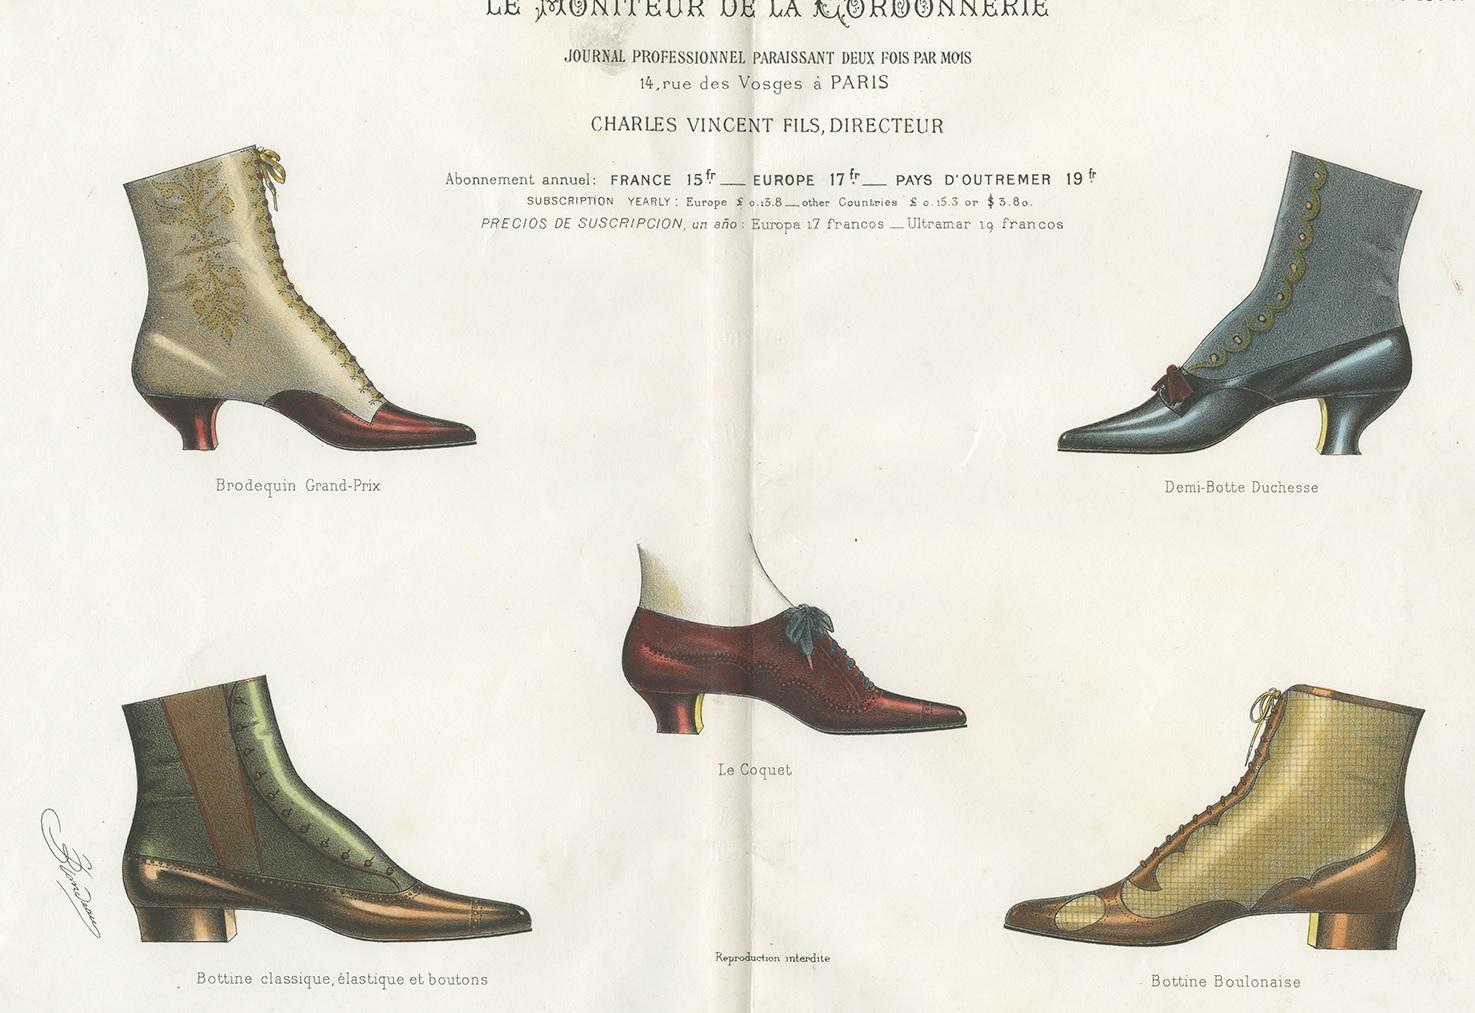 Beautiful hand colored lithograph of various shoe designs. Published in 1890 for 'Le Moniteur de la Cordonnerie', a trade catalogue of Parisian shoe designers/suppliers. Centre fold as issued.